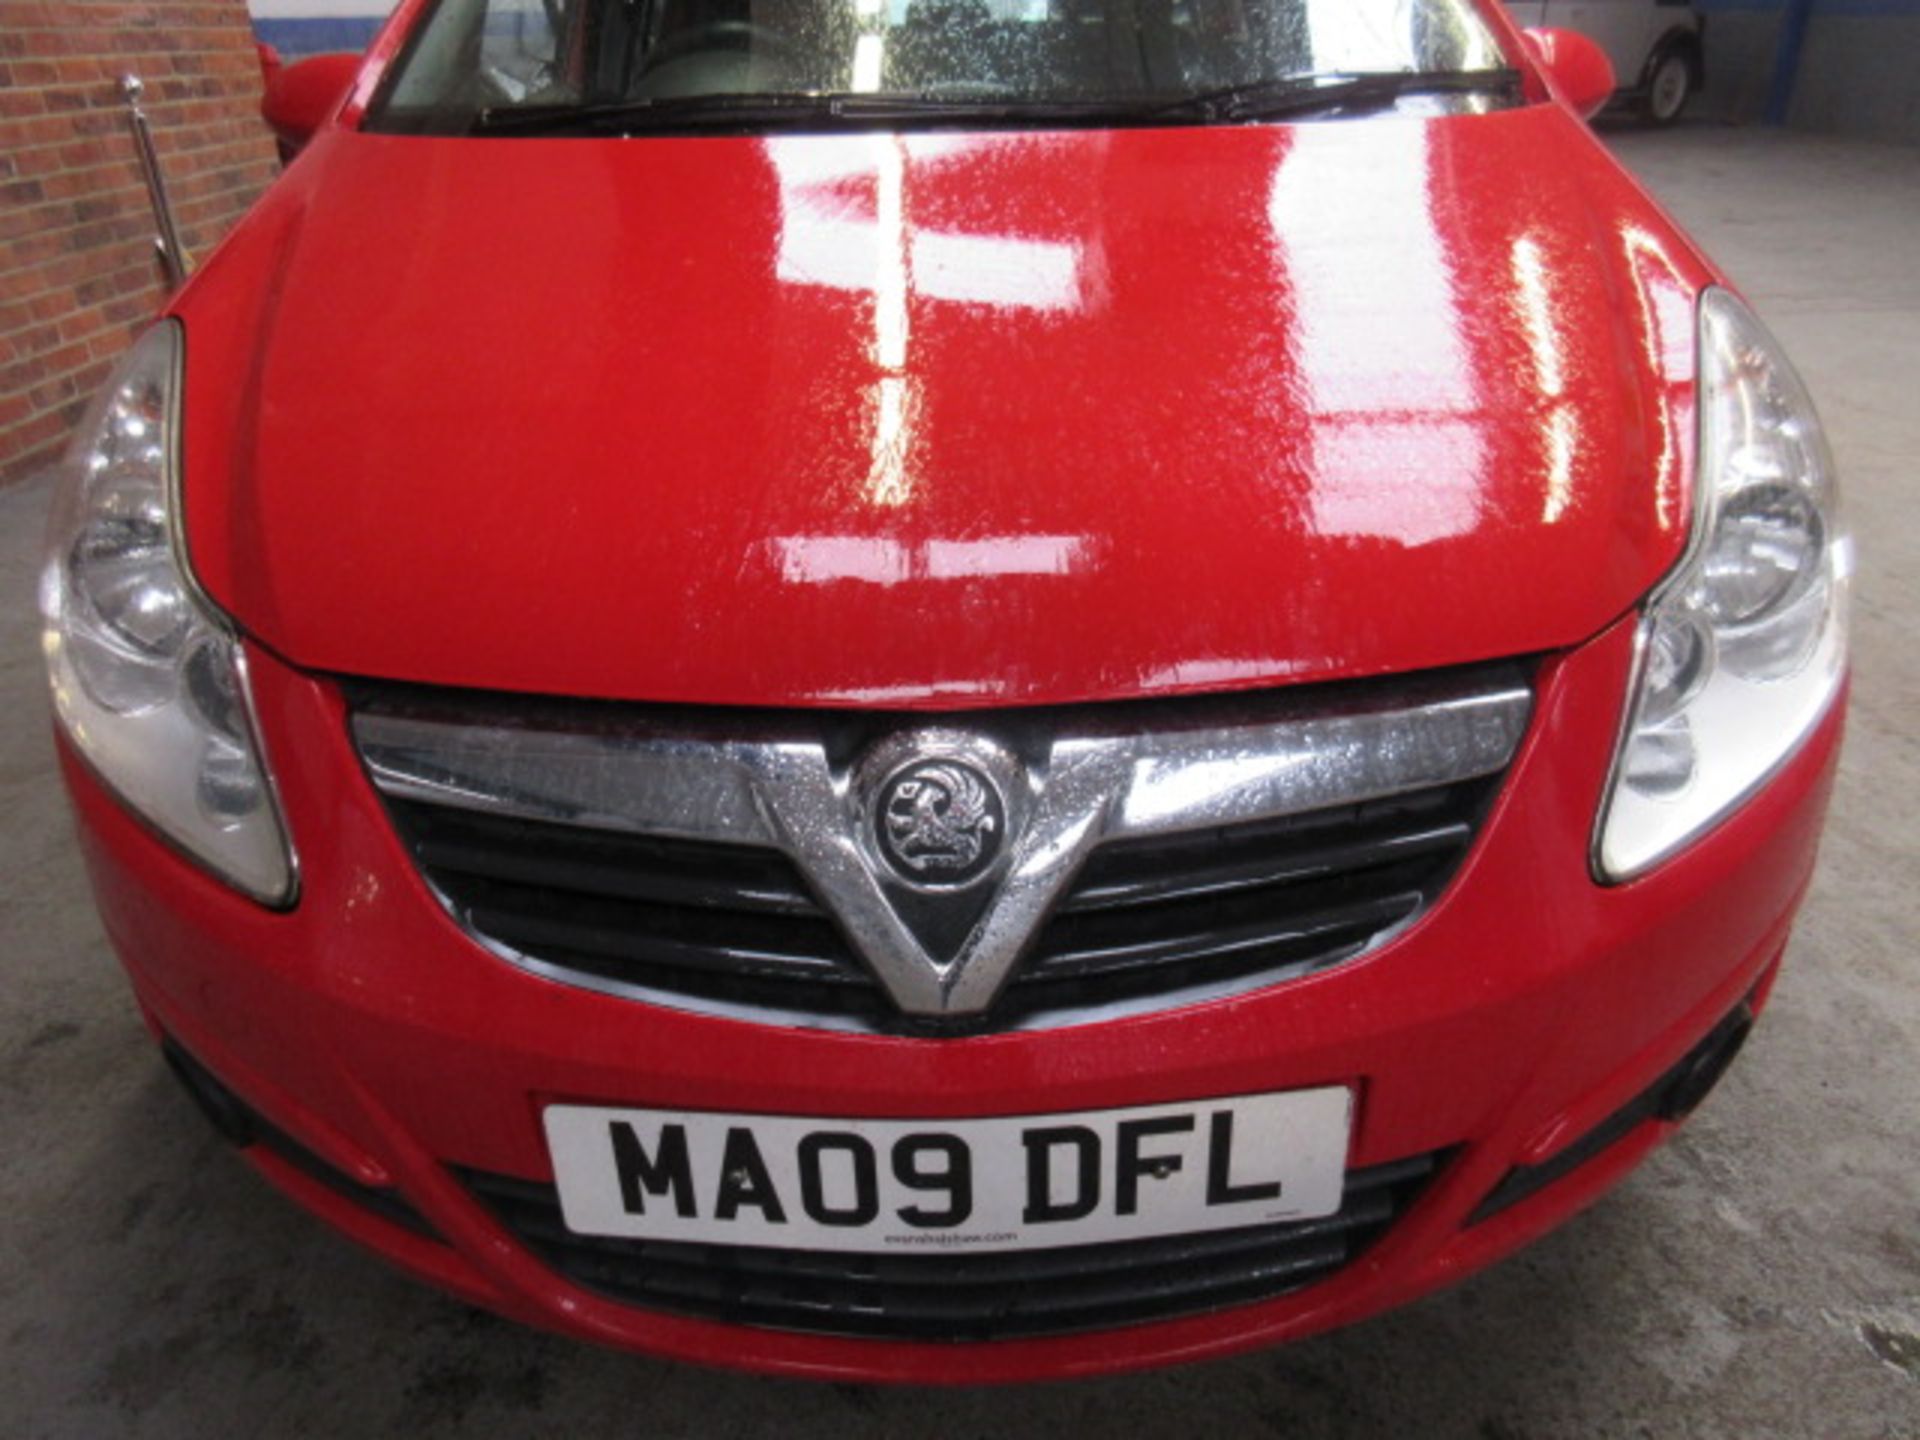 09 09 Vauxhall Corsa Design - Image 11 of 18